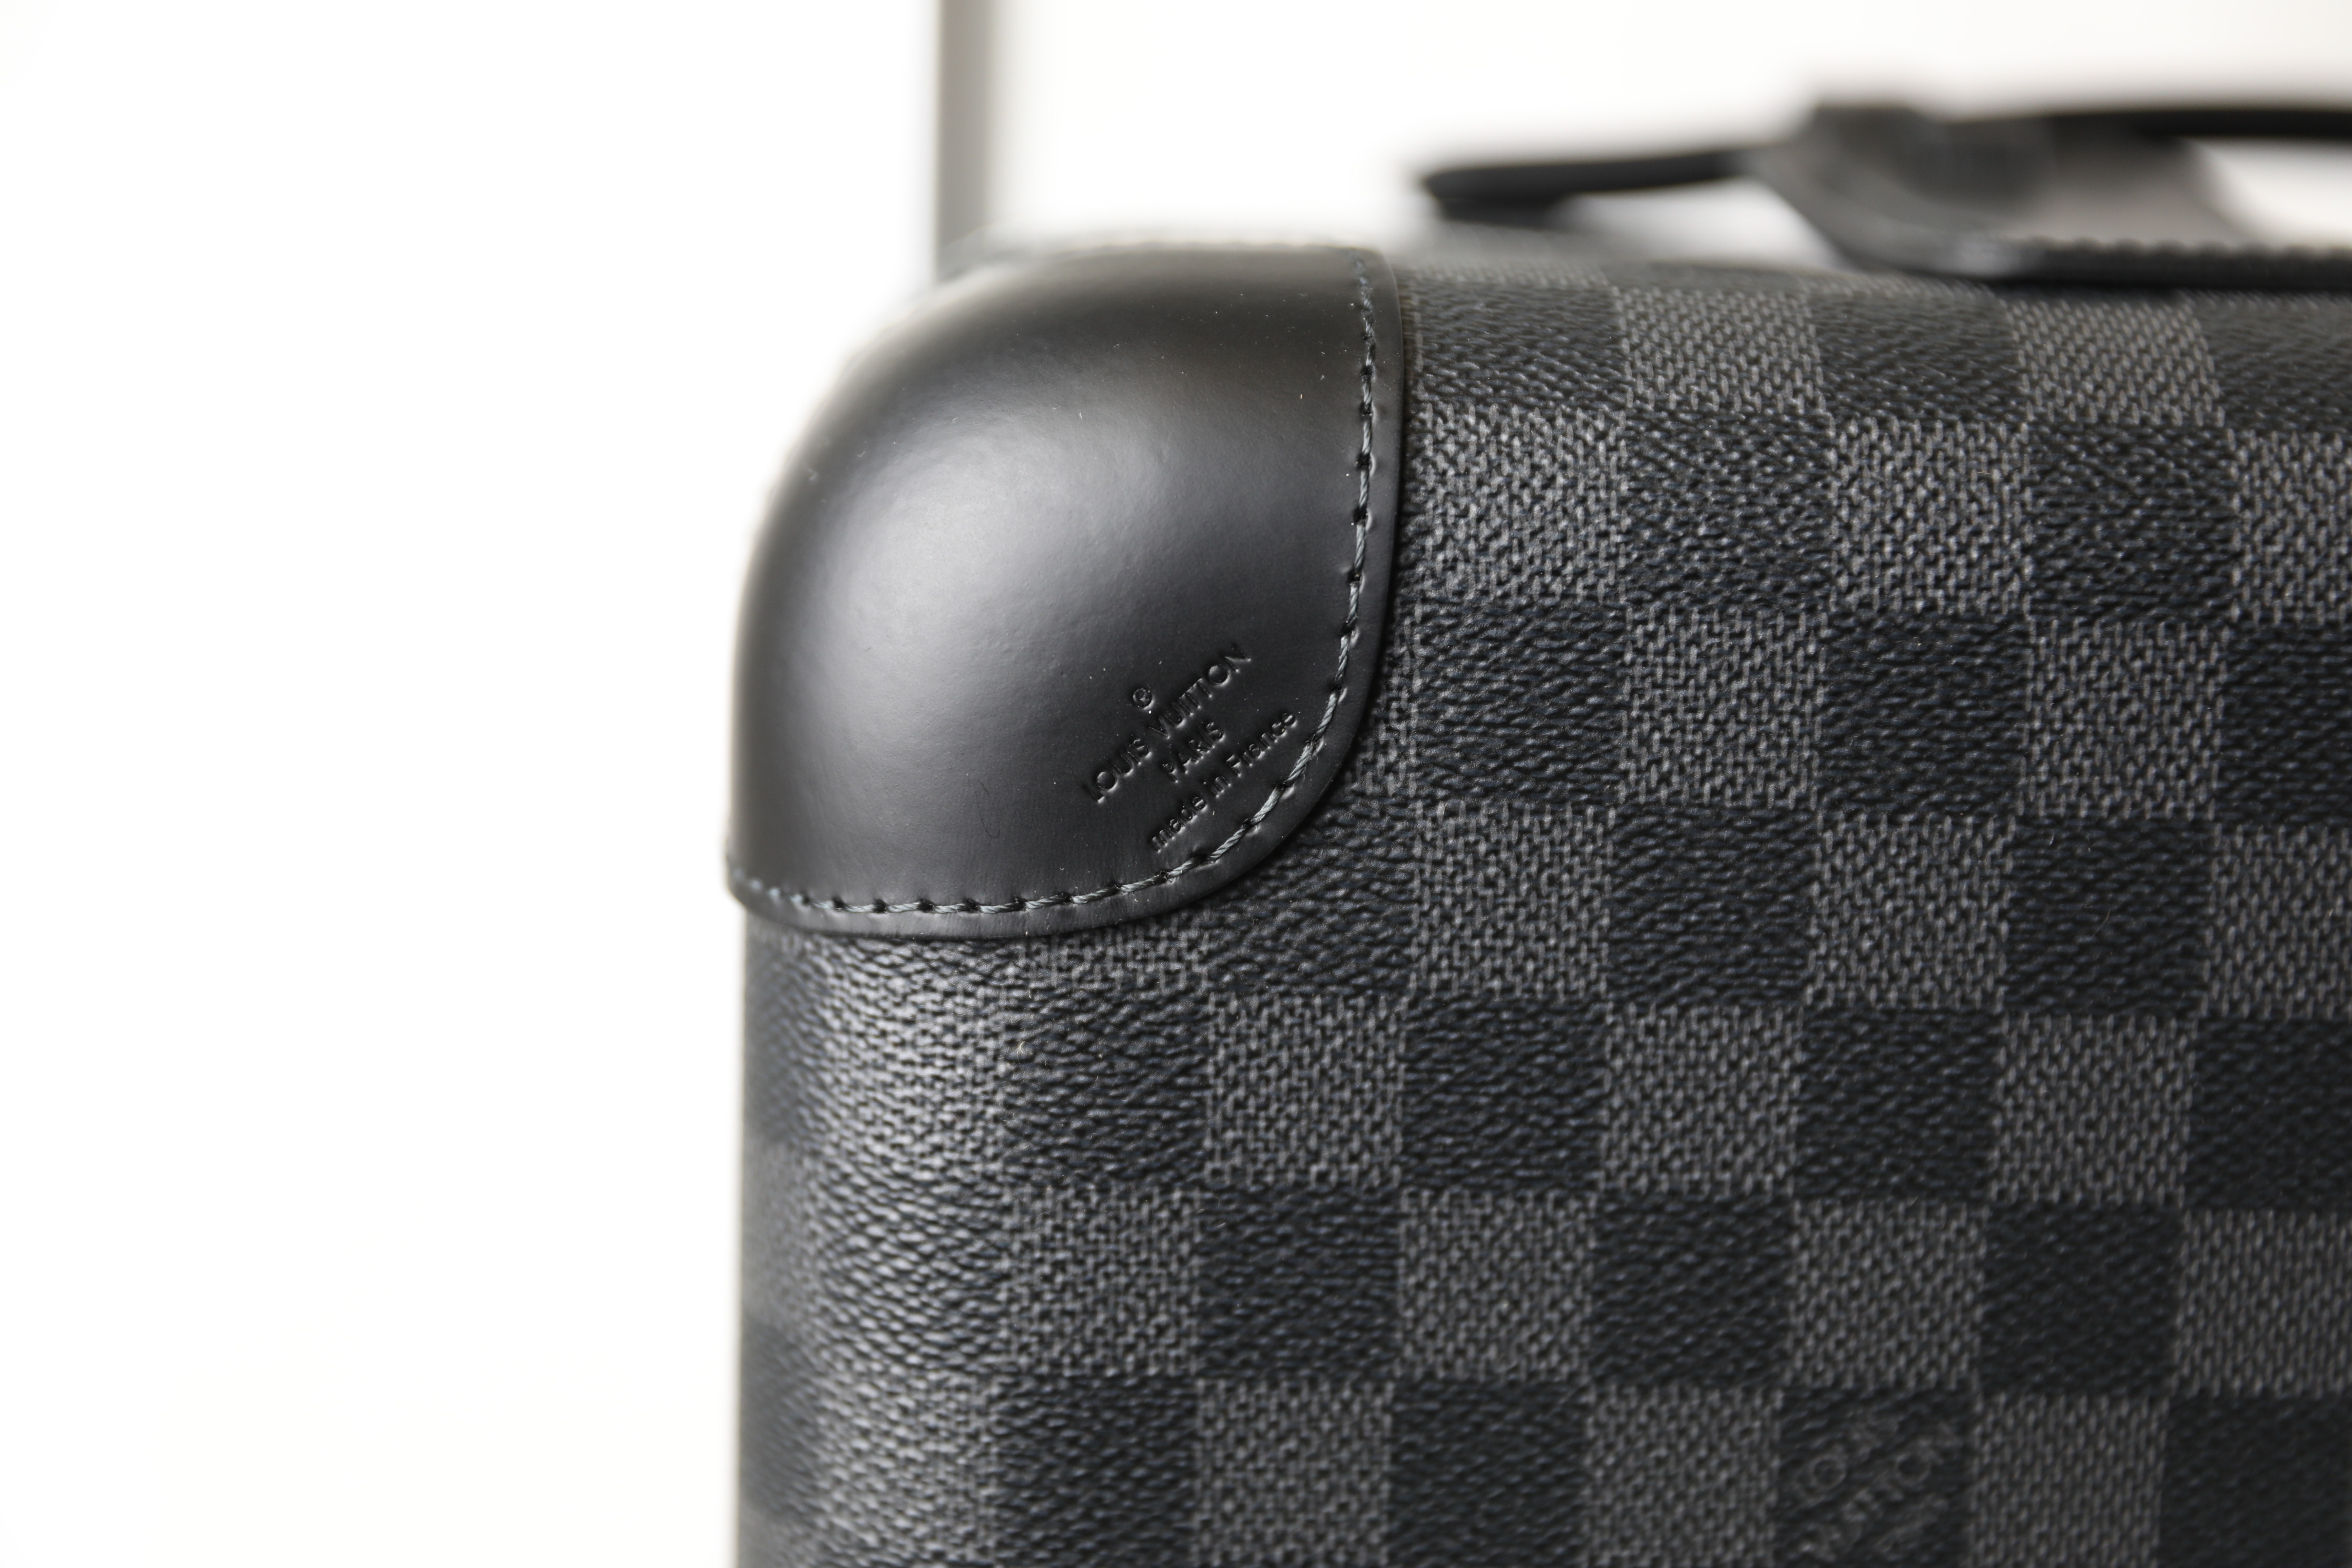 Louis Vuitton Horizon 50 Carry On – The Luxury Exchange PDX